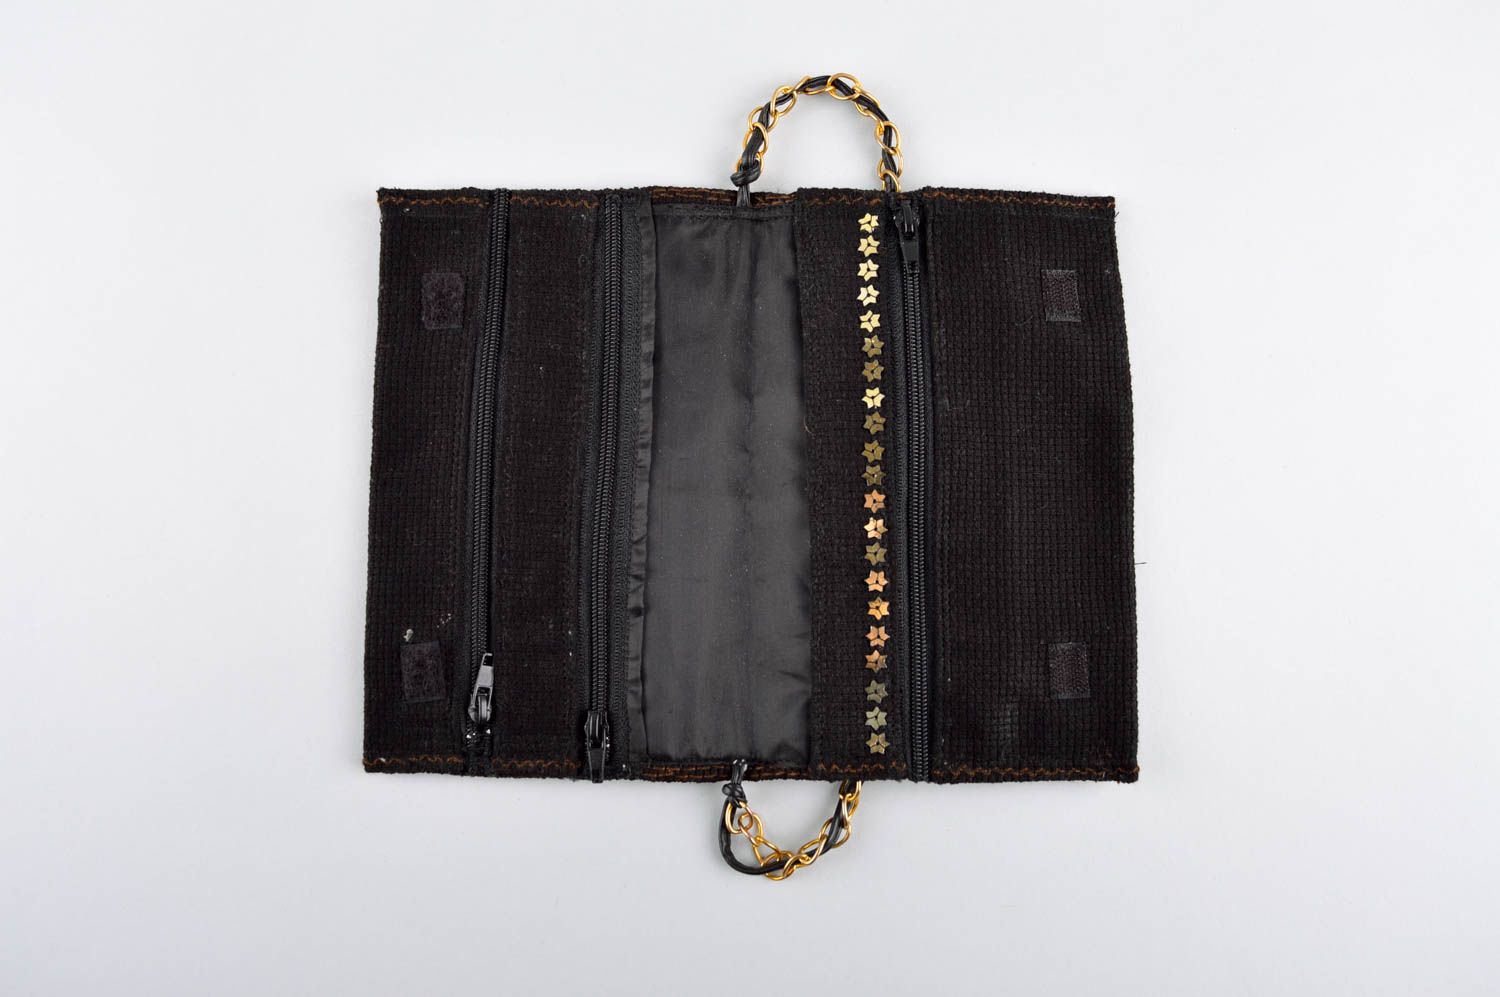 Handmade purse with embroidery stylish handbag fashion accessories for girls photo 4